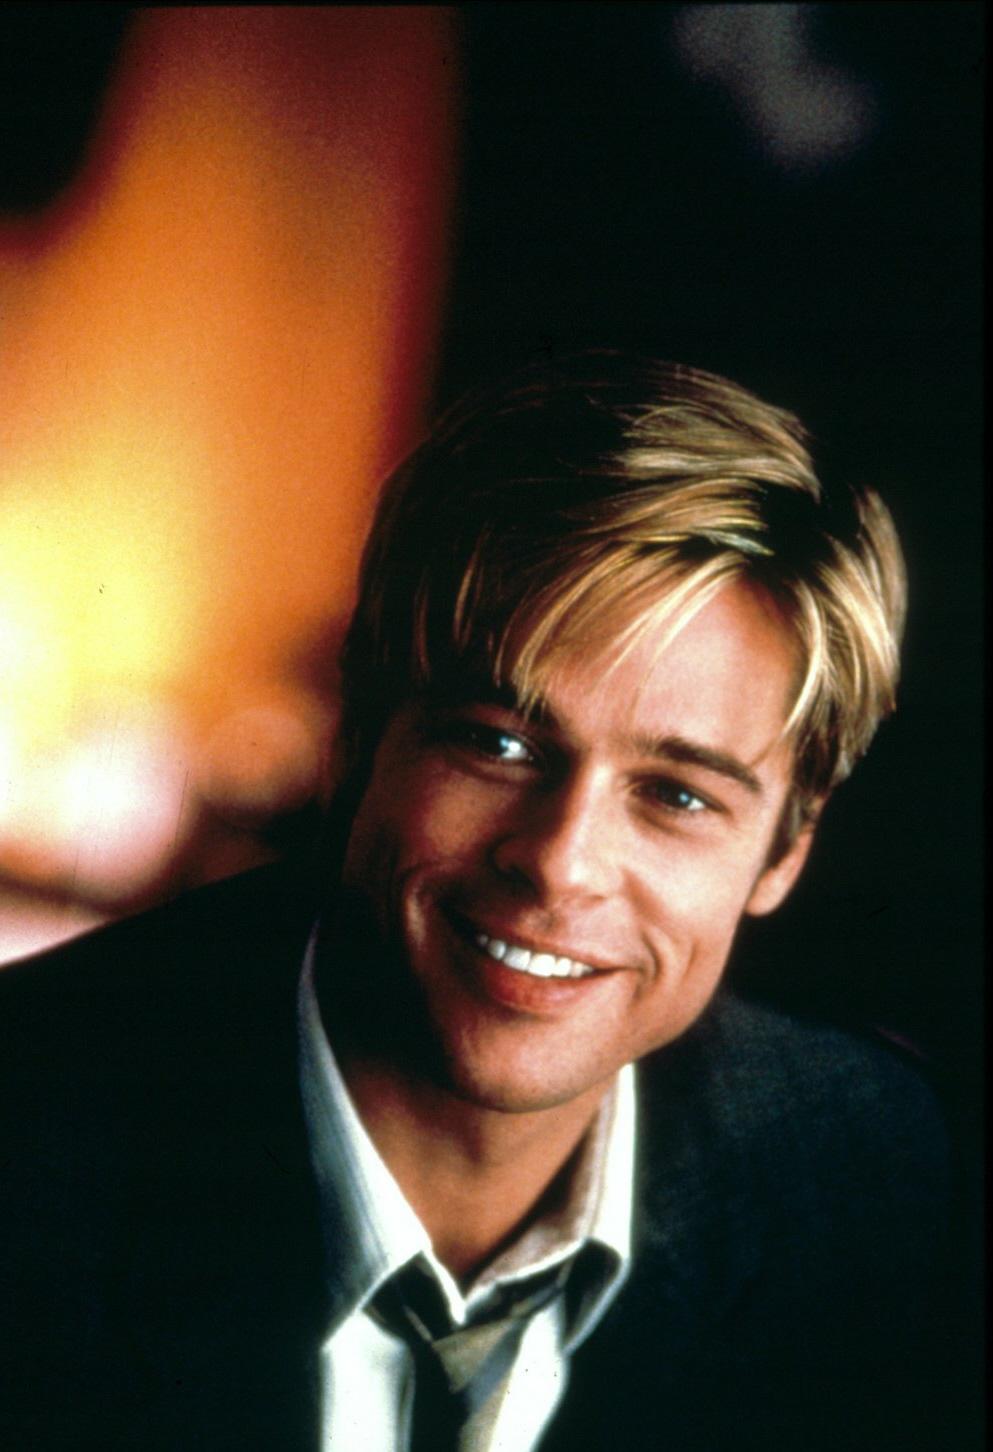 Brad Pitt photo gallery best Brad Pitt pics. Celebs